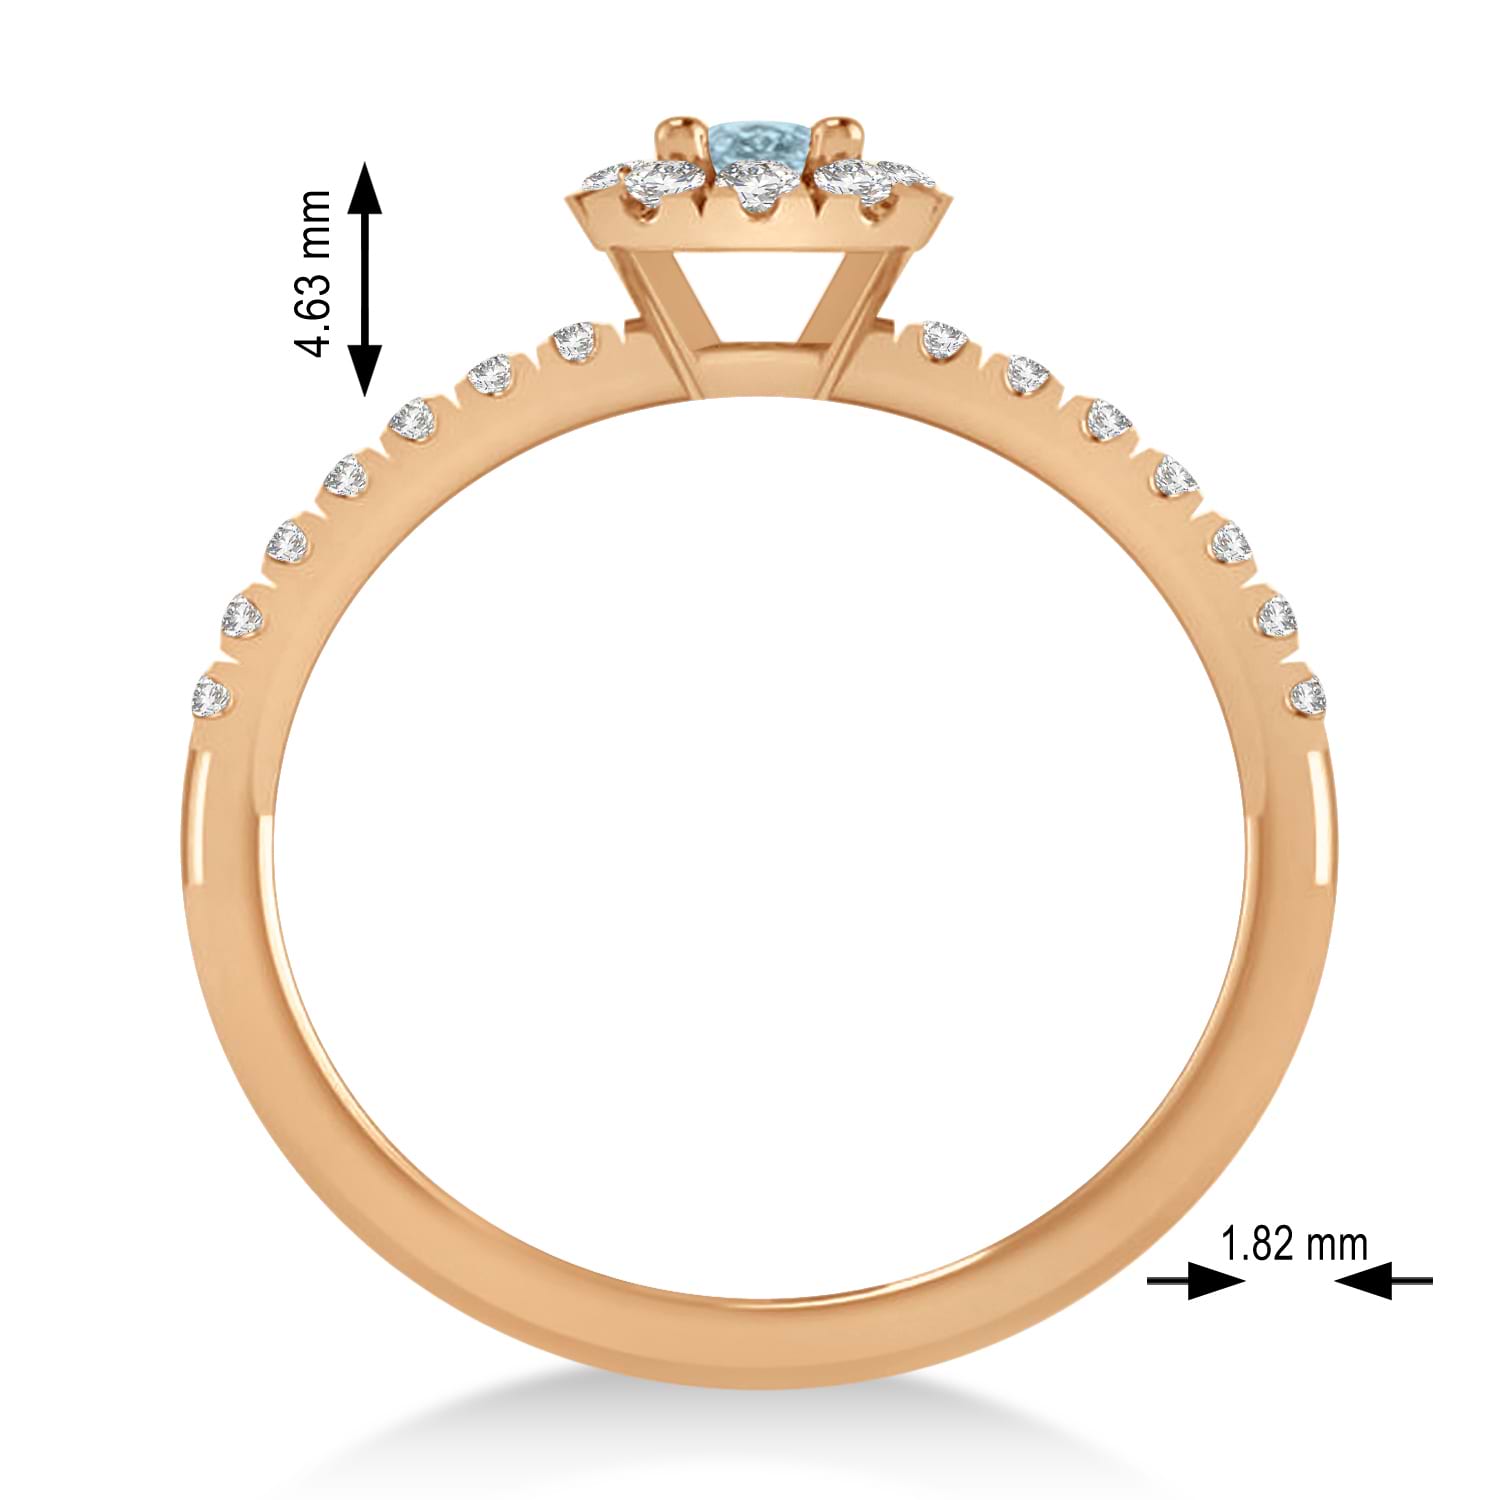 Emerald Aquamarine & Diamond Halo Engagement Ring 14k Rose Gold (0.68ct)